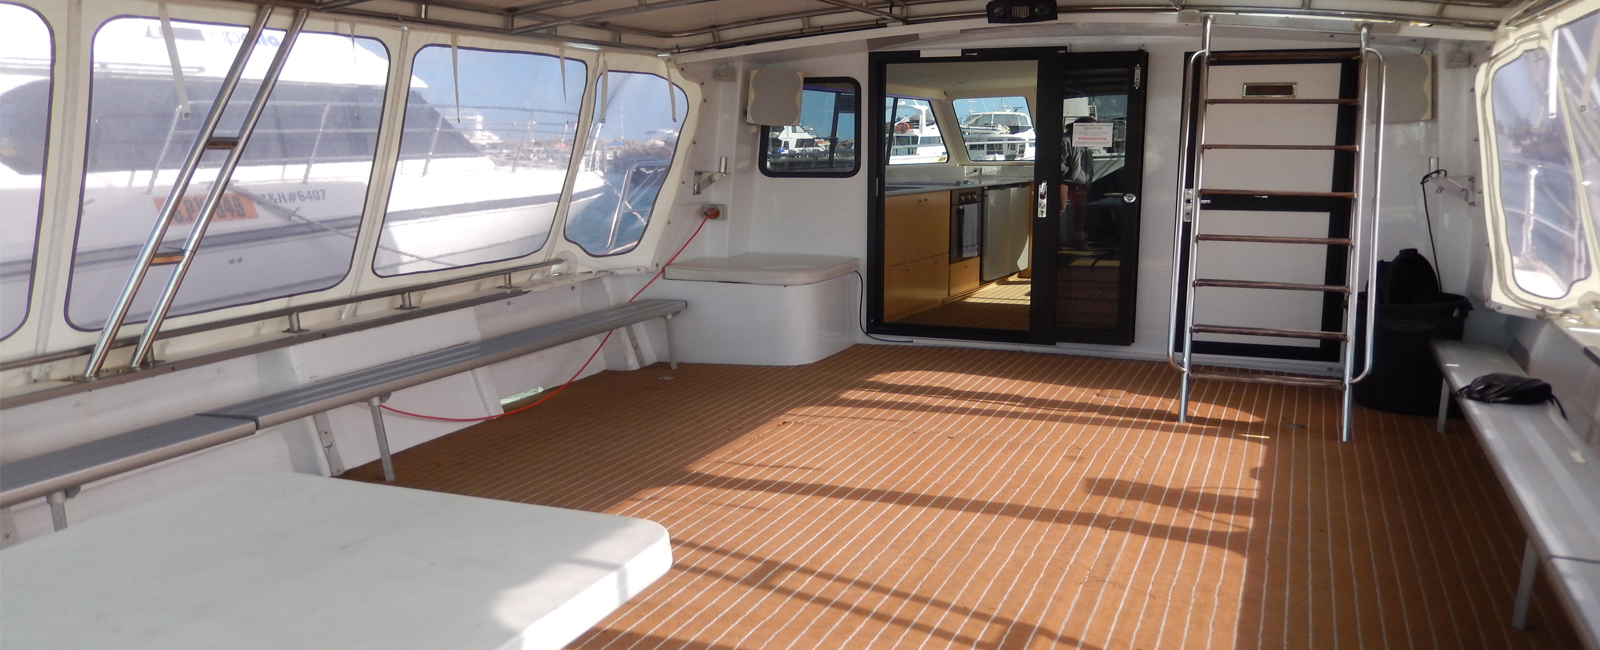 AQUARIUS-boat-charters-Perth-WA-back-deck